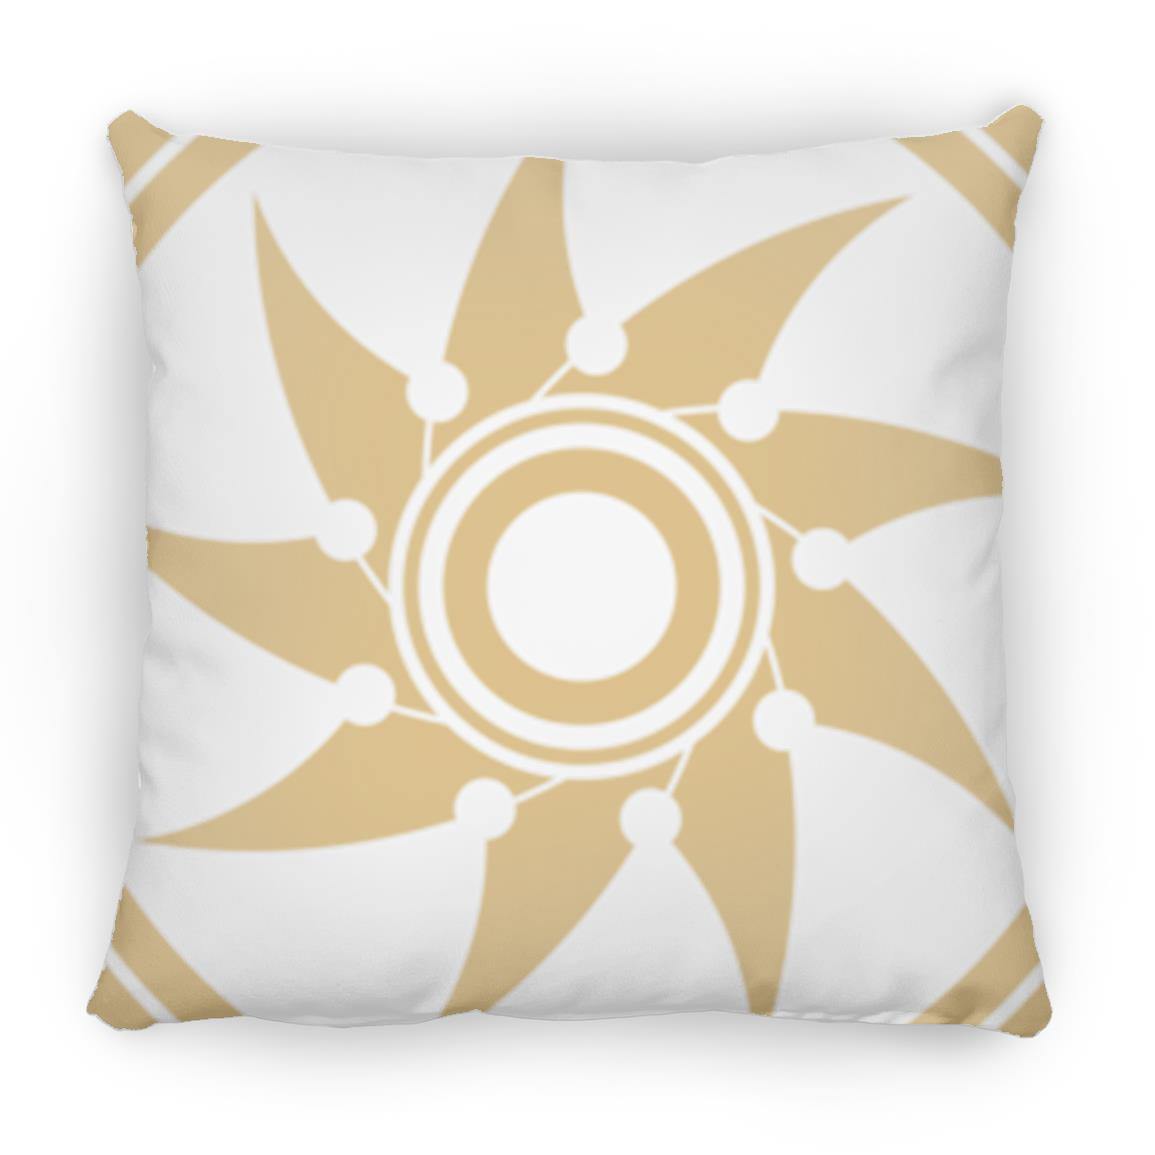 Crop Circle Pillow - Etchilhampton 5 - Shapes of Wisdom